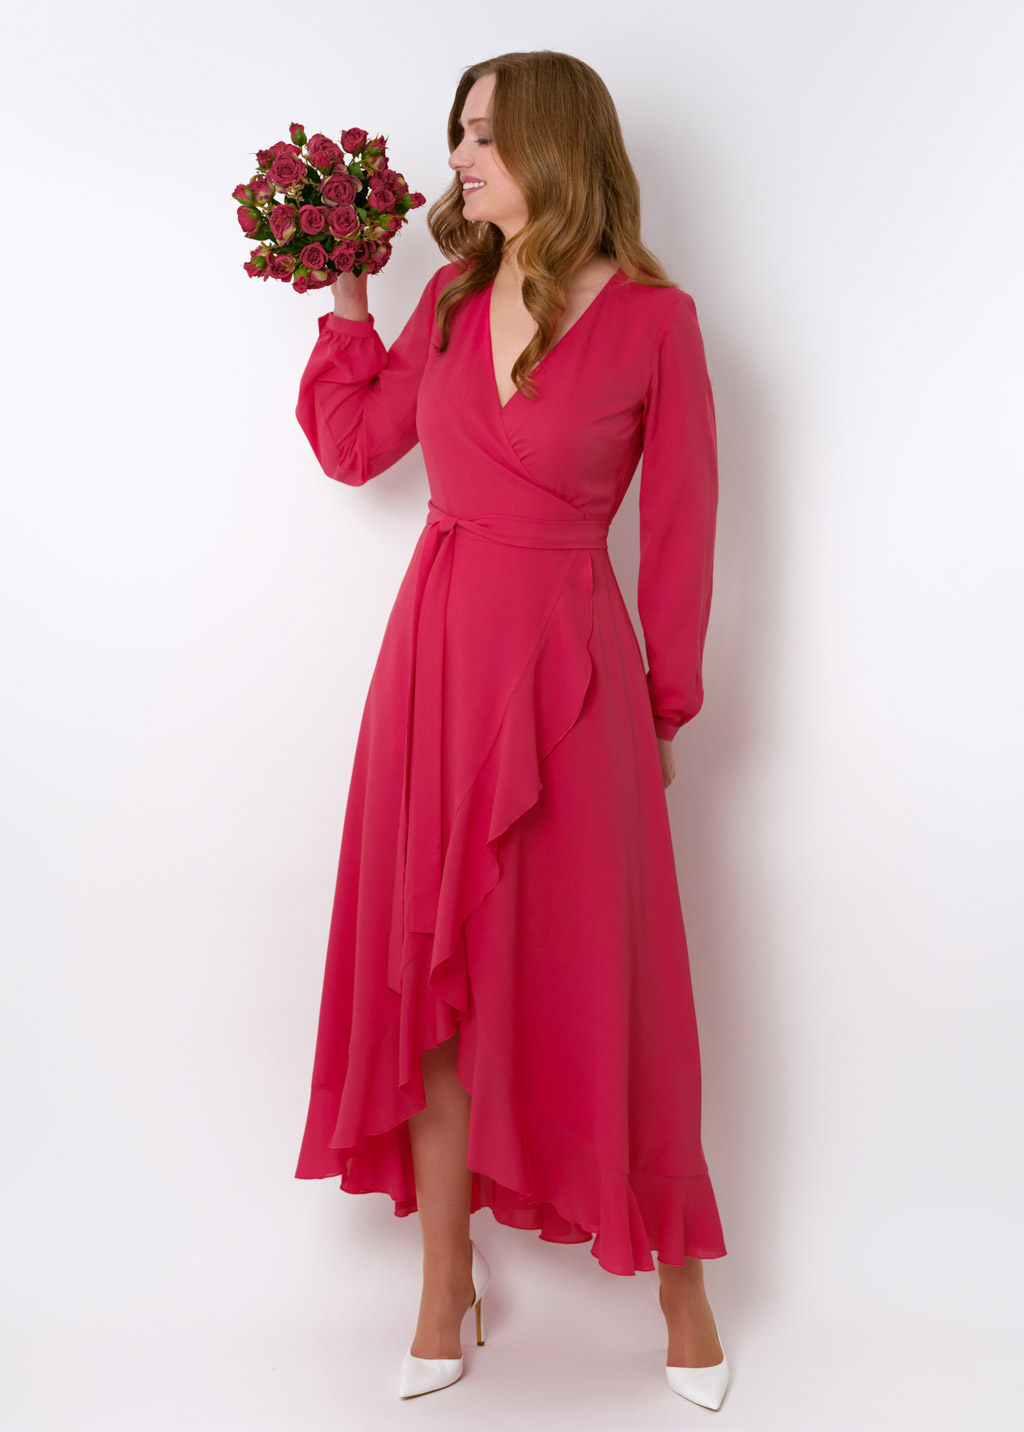 Coral pink chiffon wrap dress